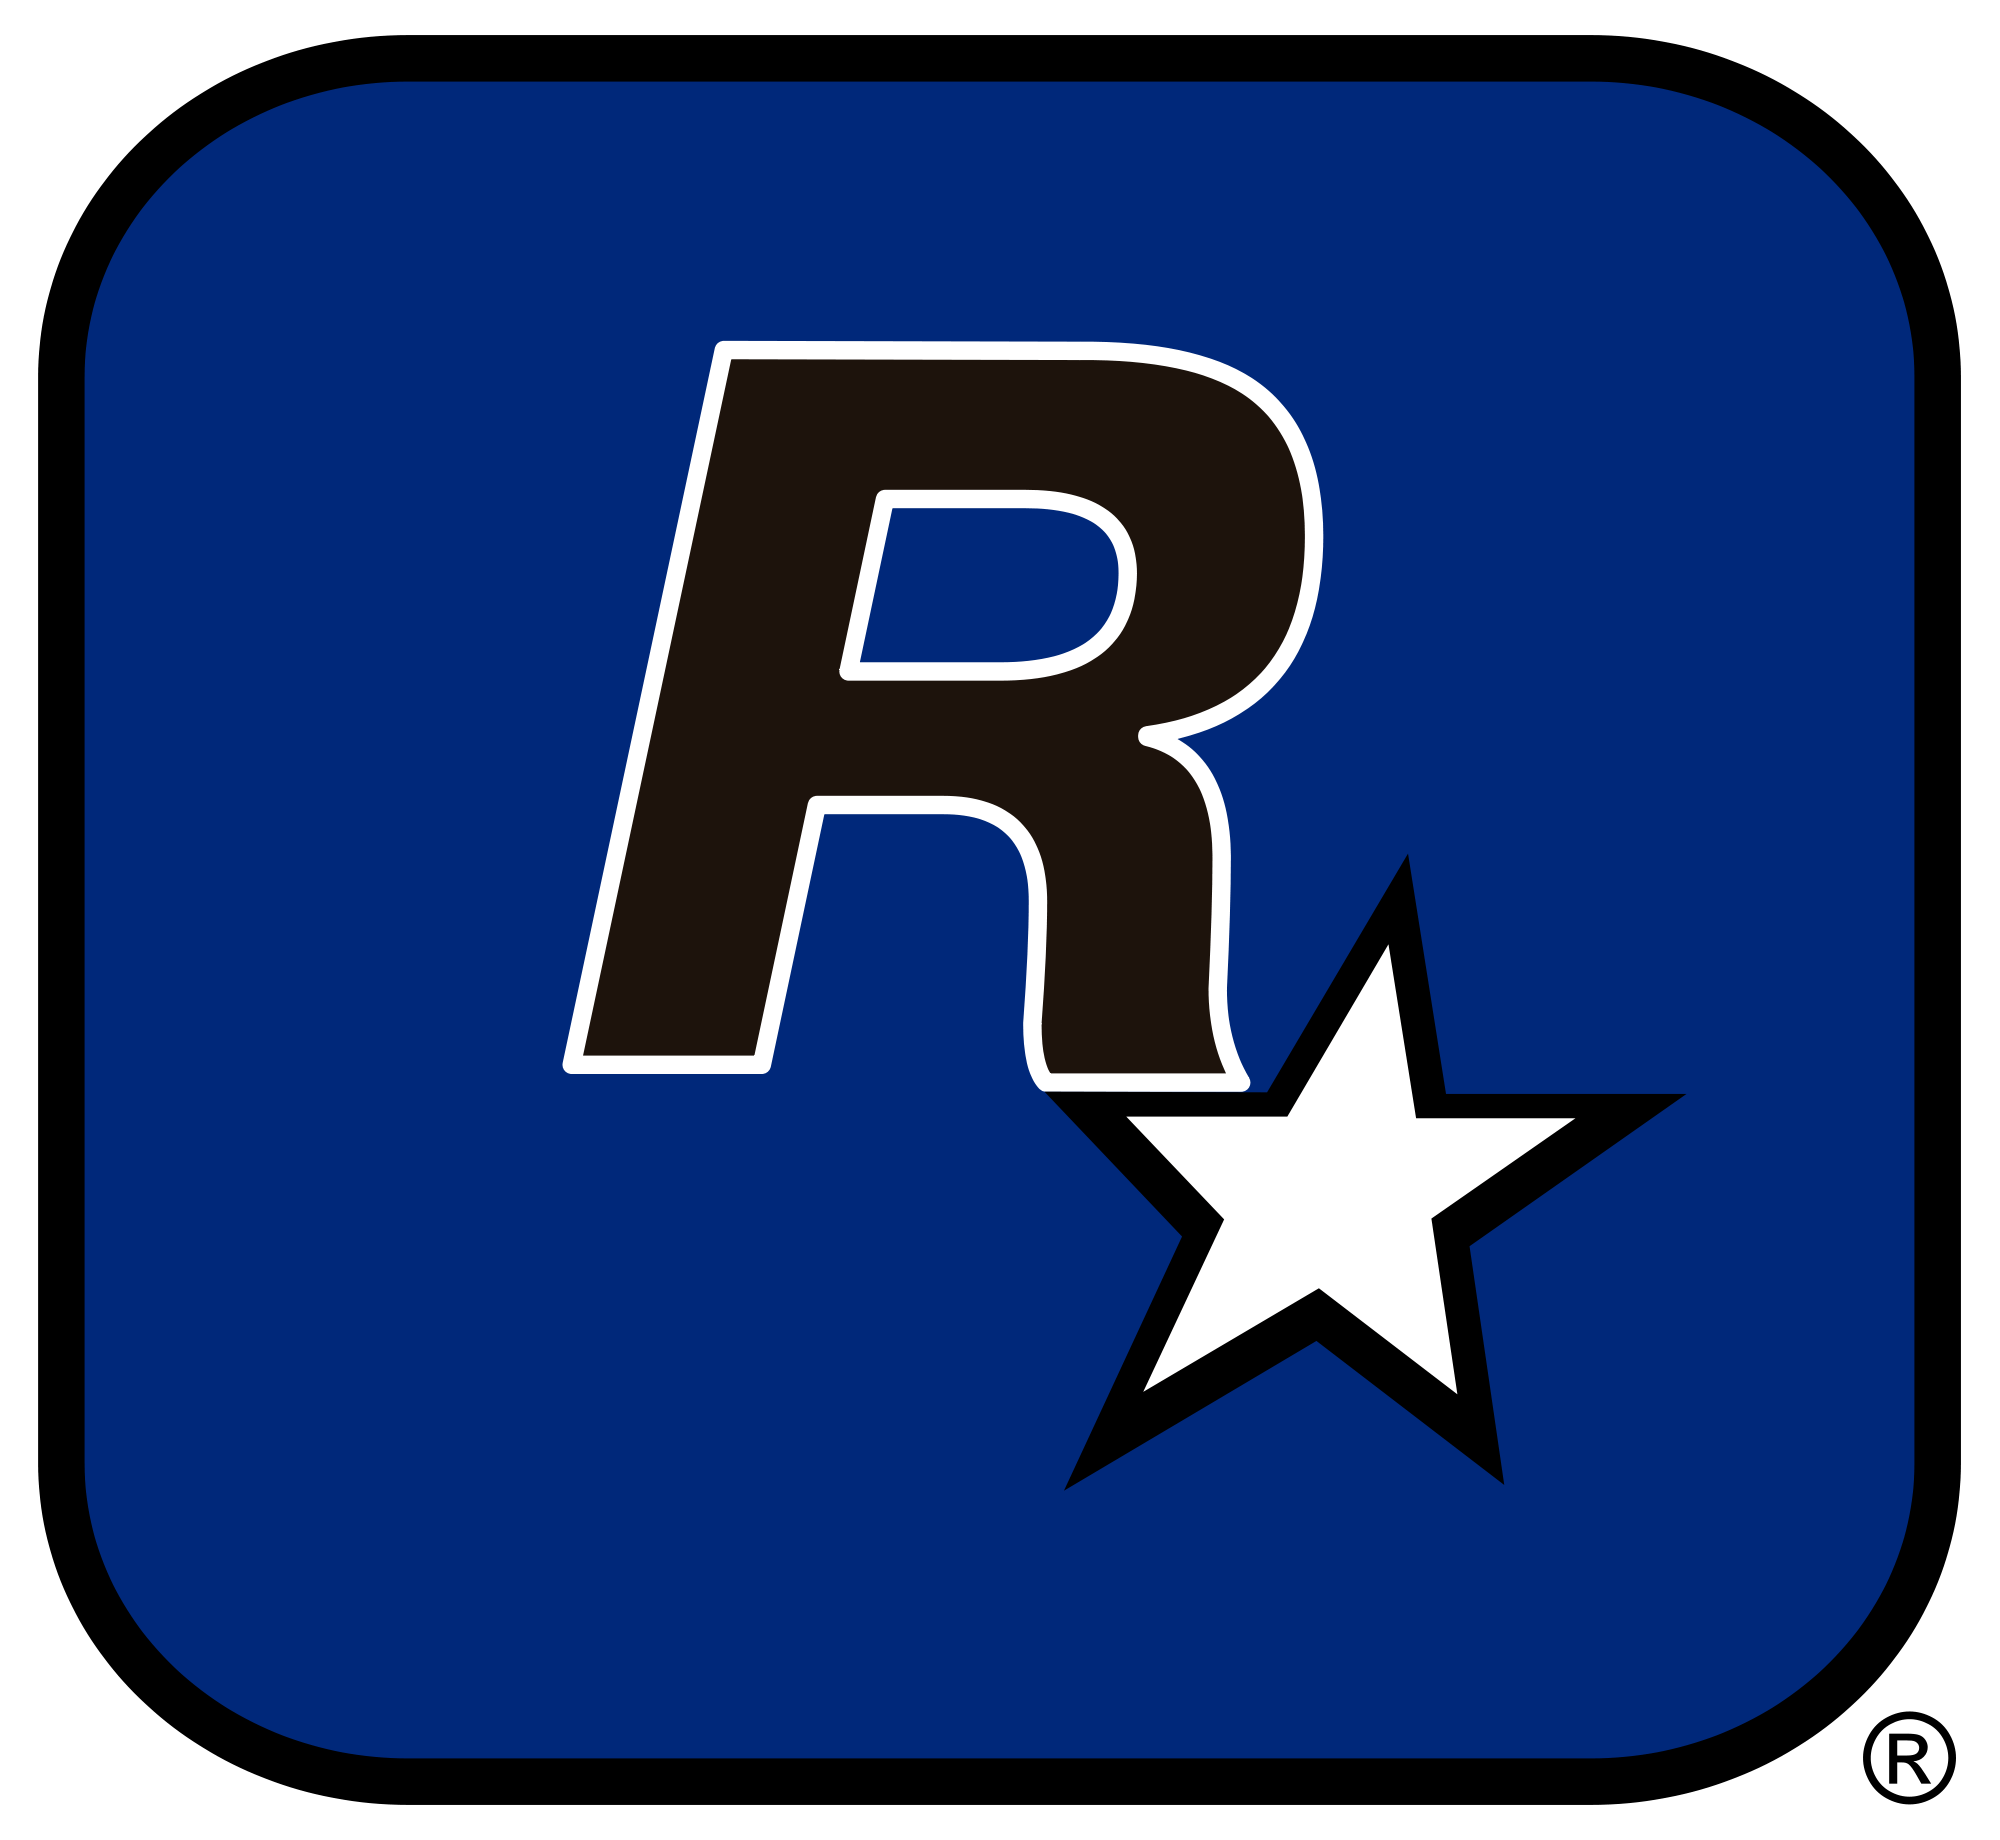 Famous Game Logo - Rockstar Games